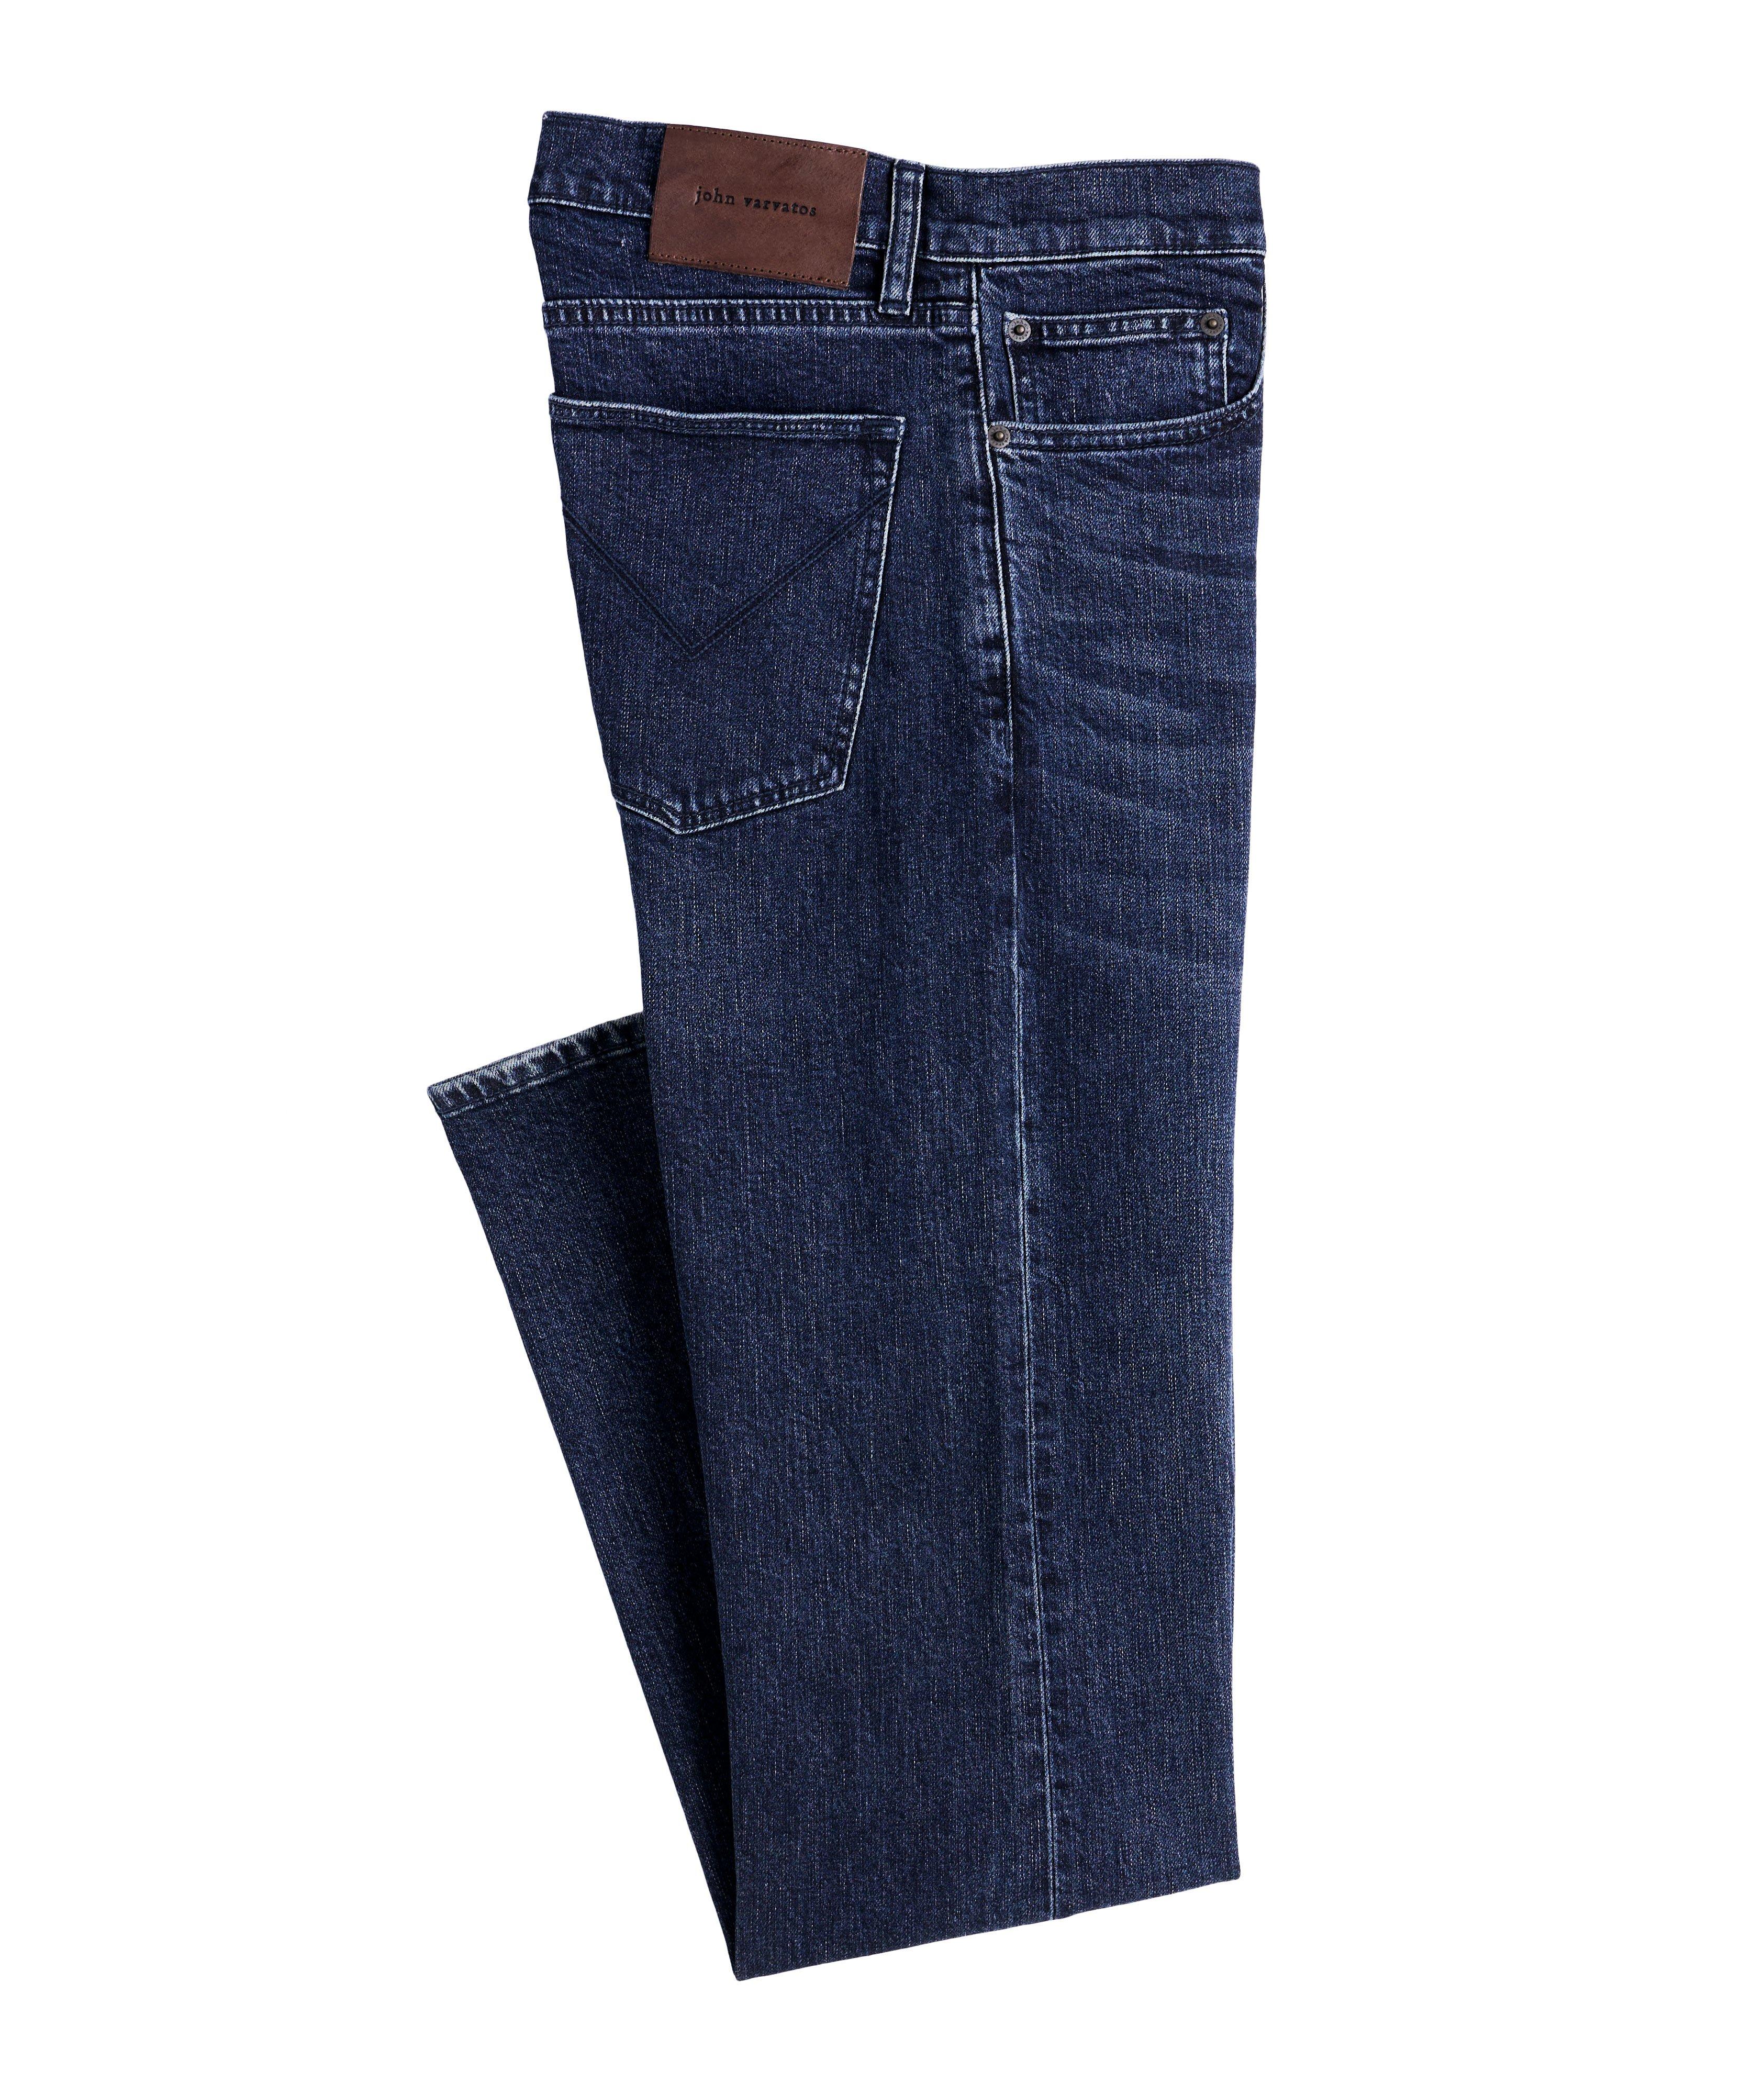 Slim Fit Innes Wash Jeans image 0